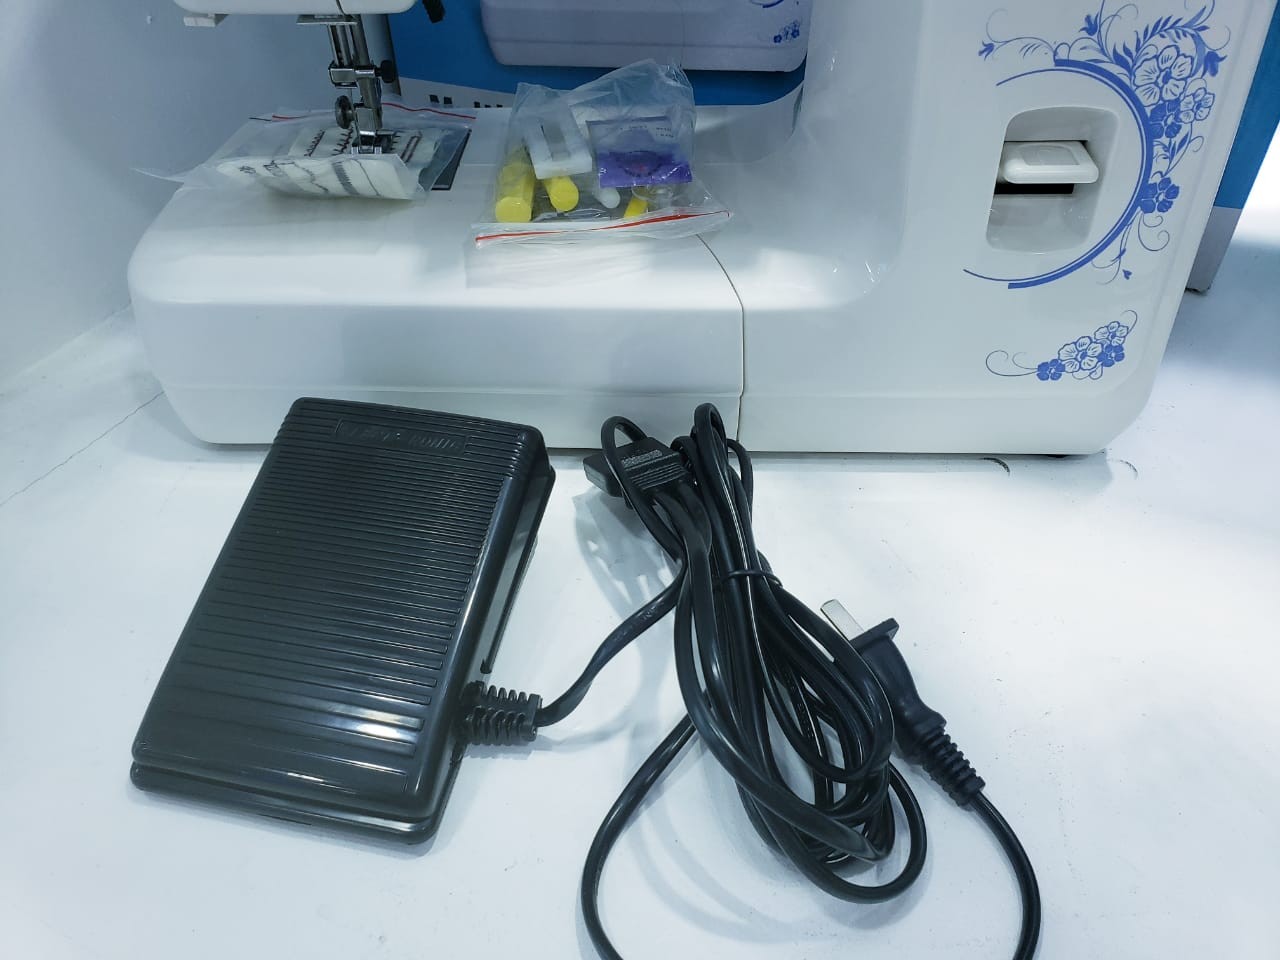 electrodomesticos - Maquina de coser Electrica multifuncional profesional JUKKY FH6224 3